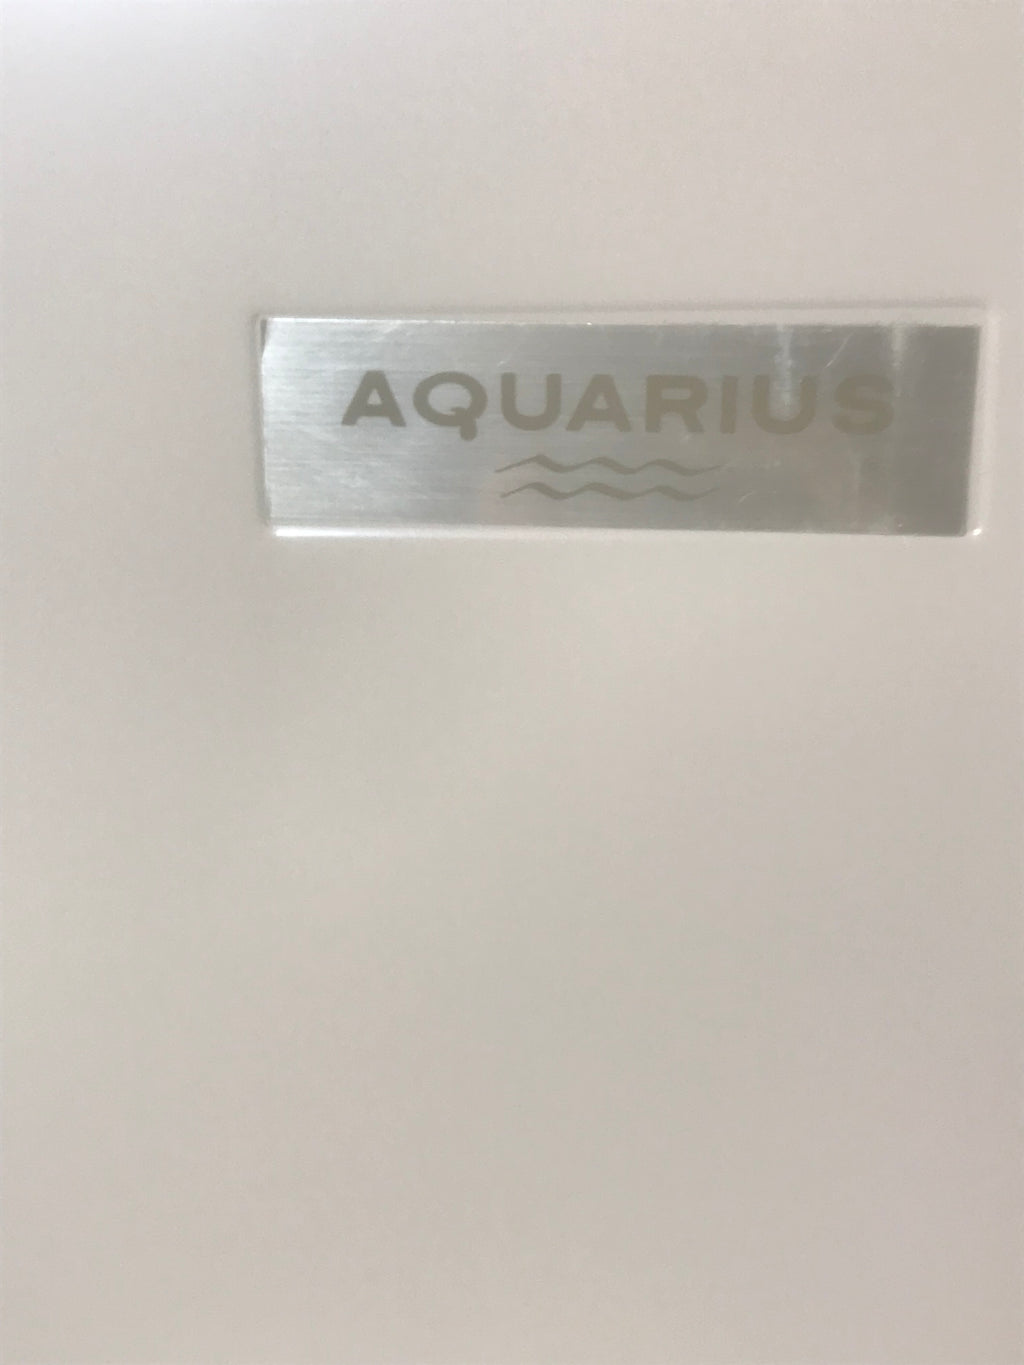 Aquarius Wall Mounted Water Cooler